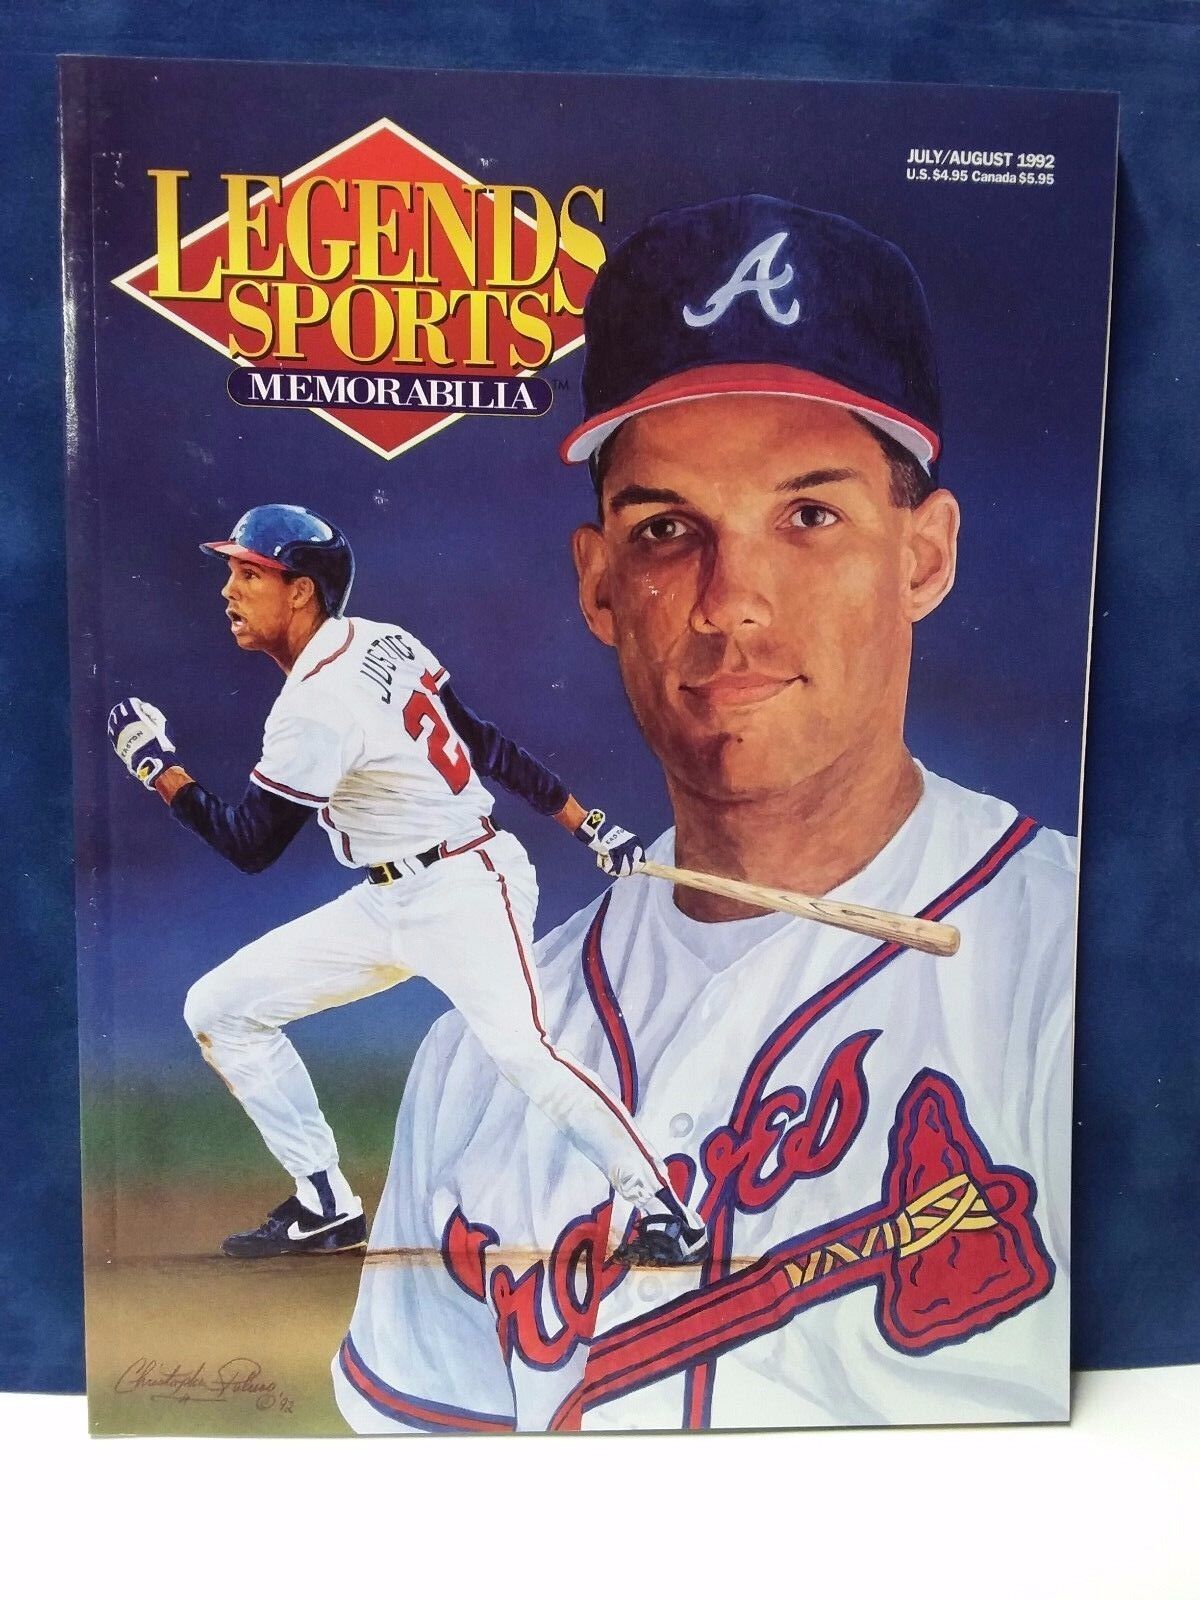 1992 Dave Justice Legends Sports Memorabilia July/August